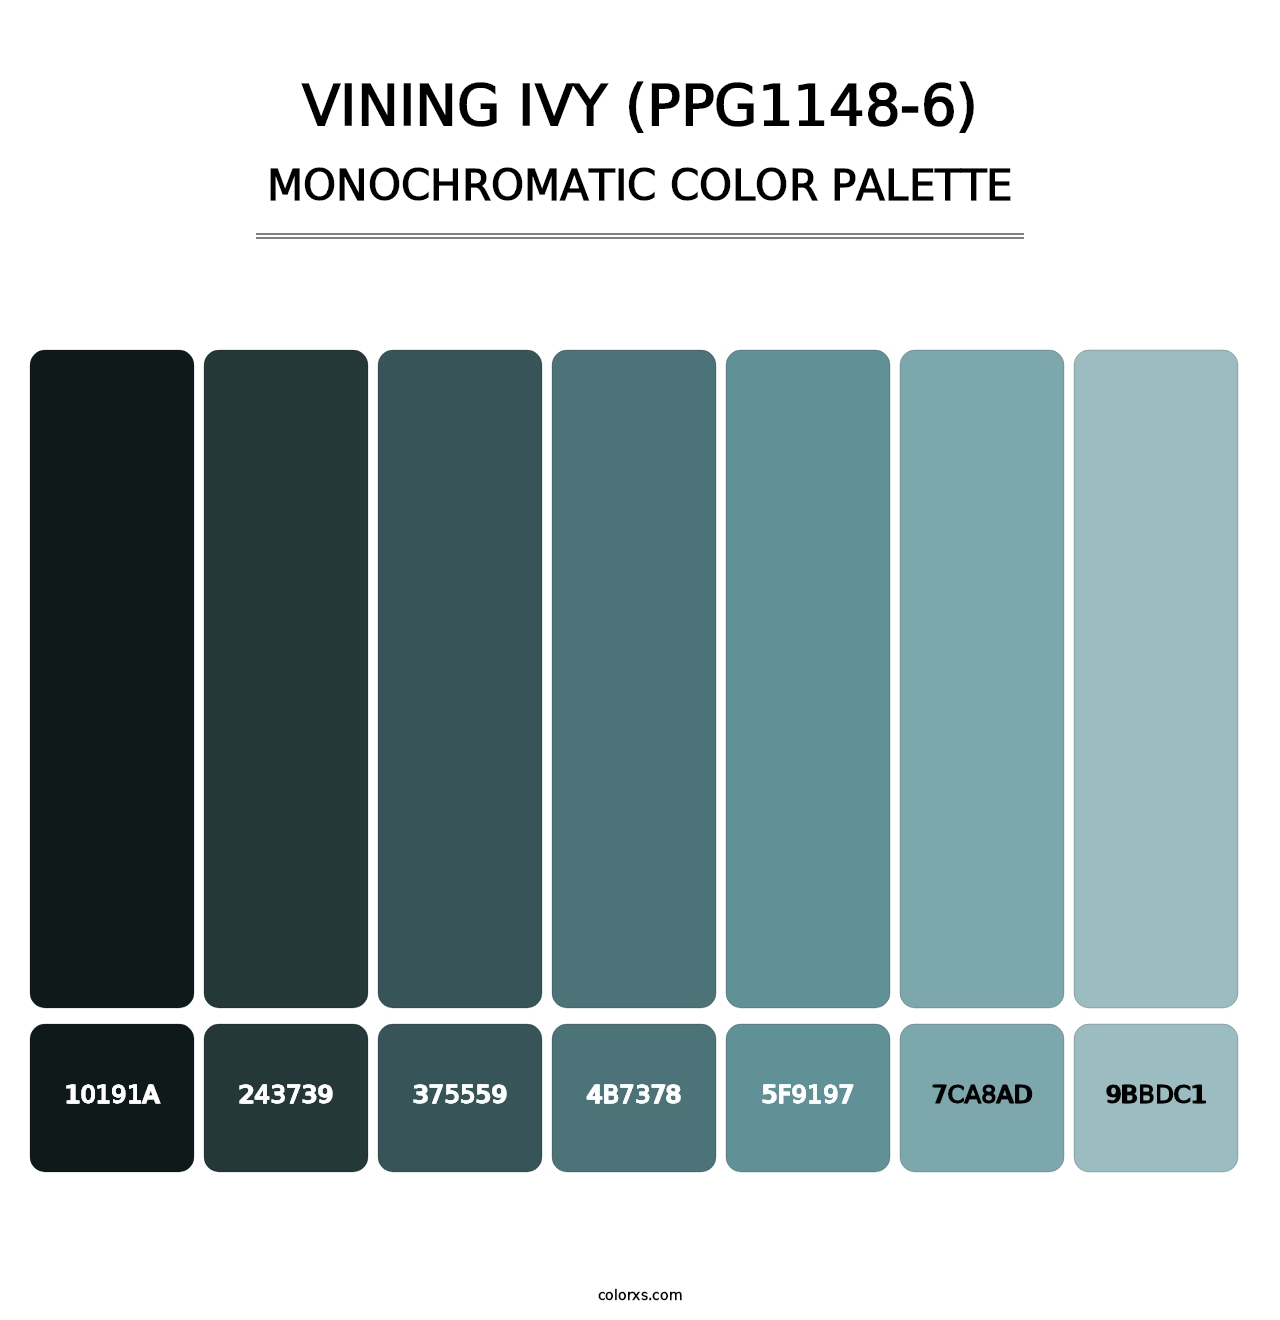 Vining Ivy (PPG1148-6) - Monochromatic Color Palette